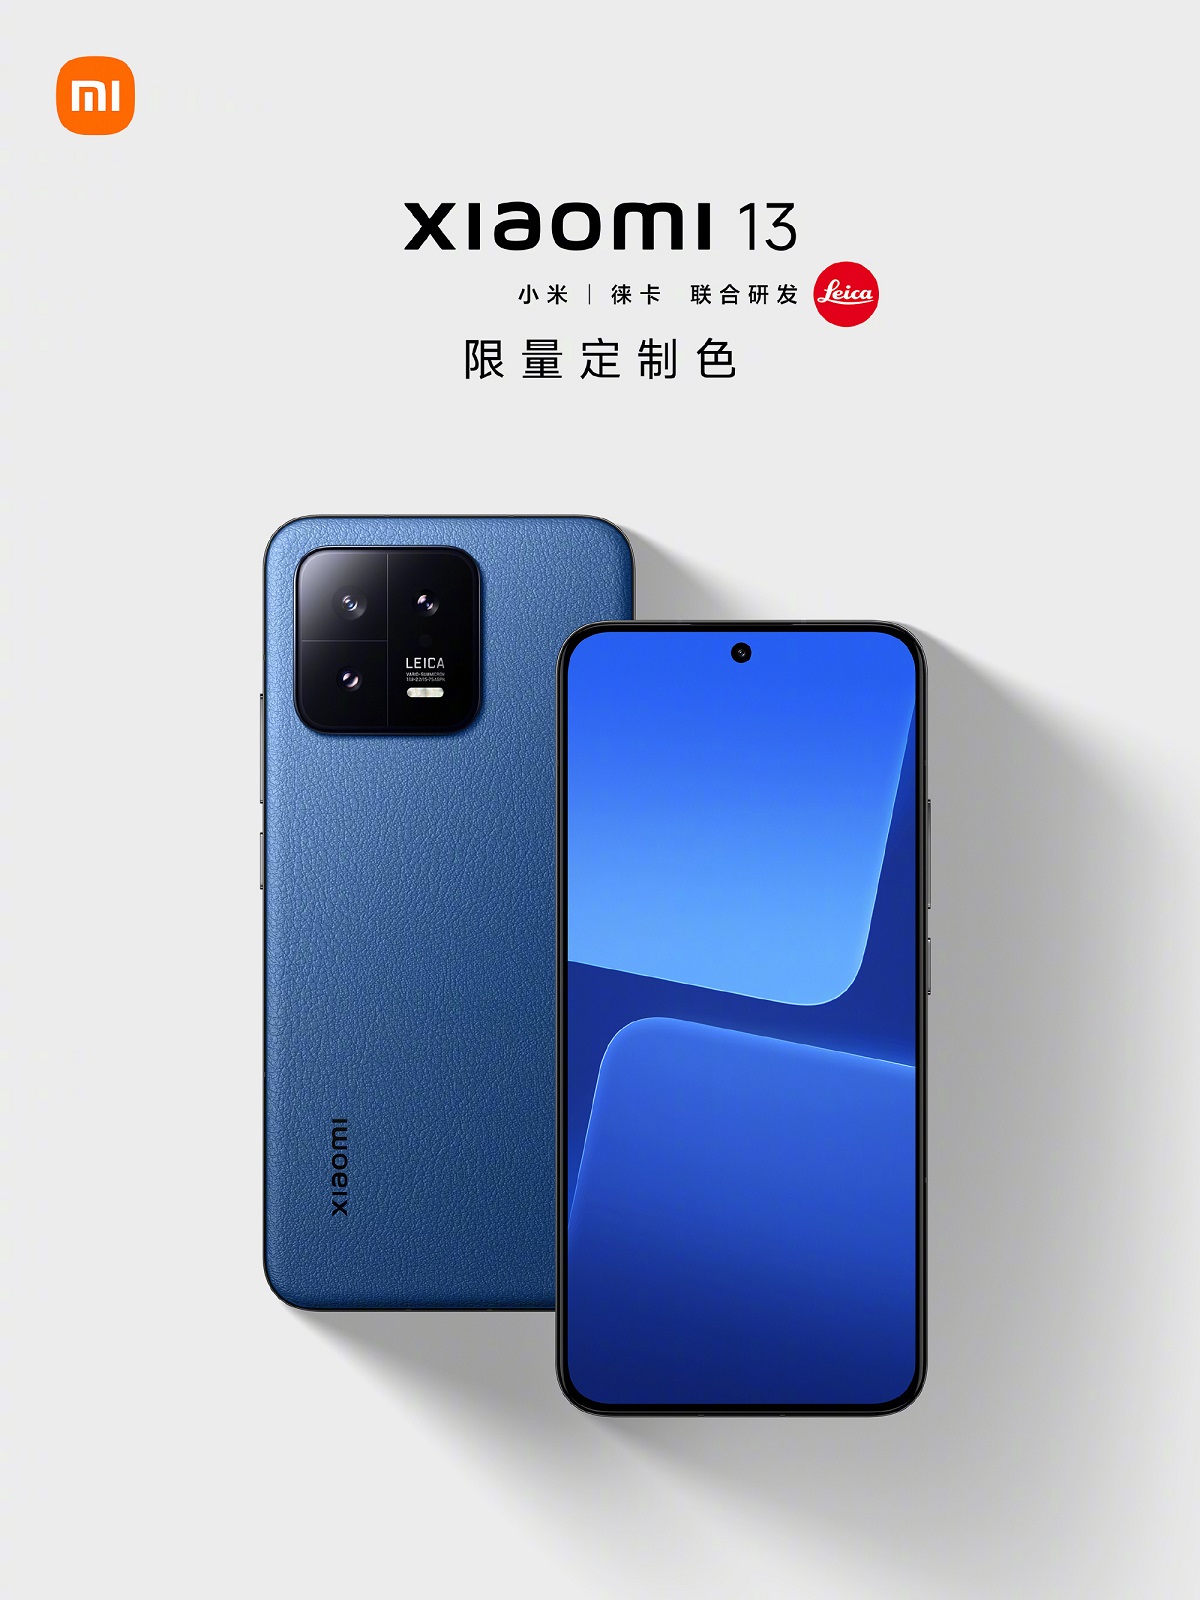 смартфон Xiaomi 13 в синем цвете